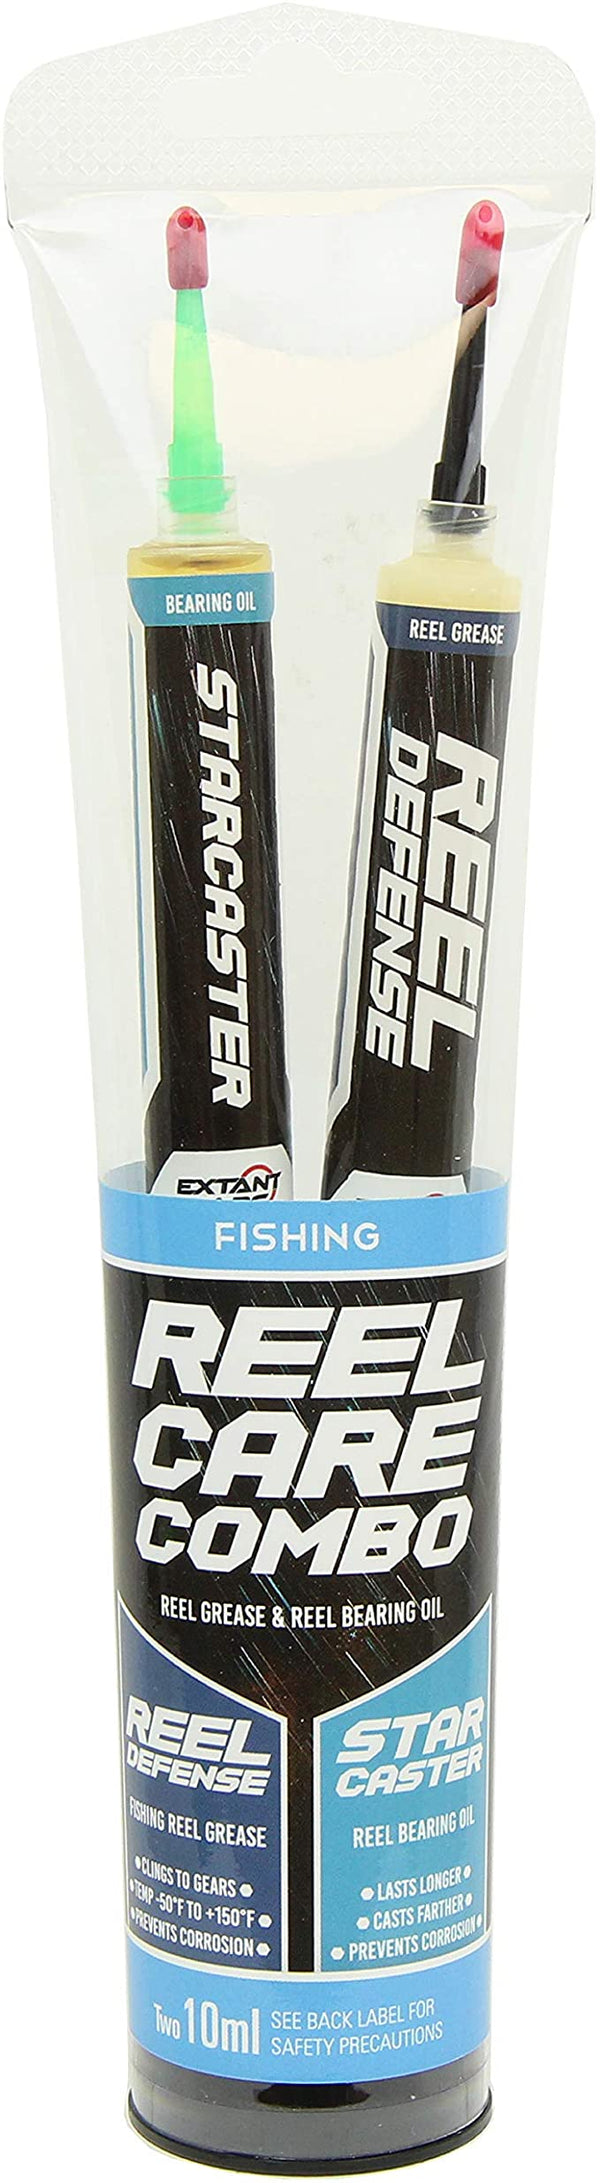 Reel Men HydroShield - Fishing Reel and Fishing Rod Protection Spray